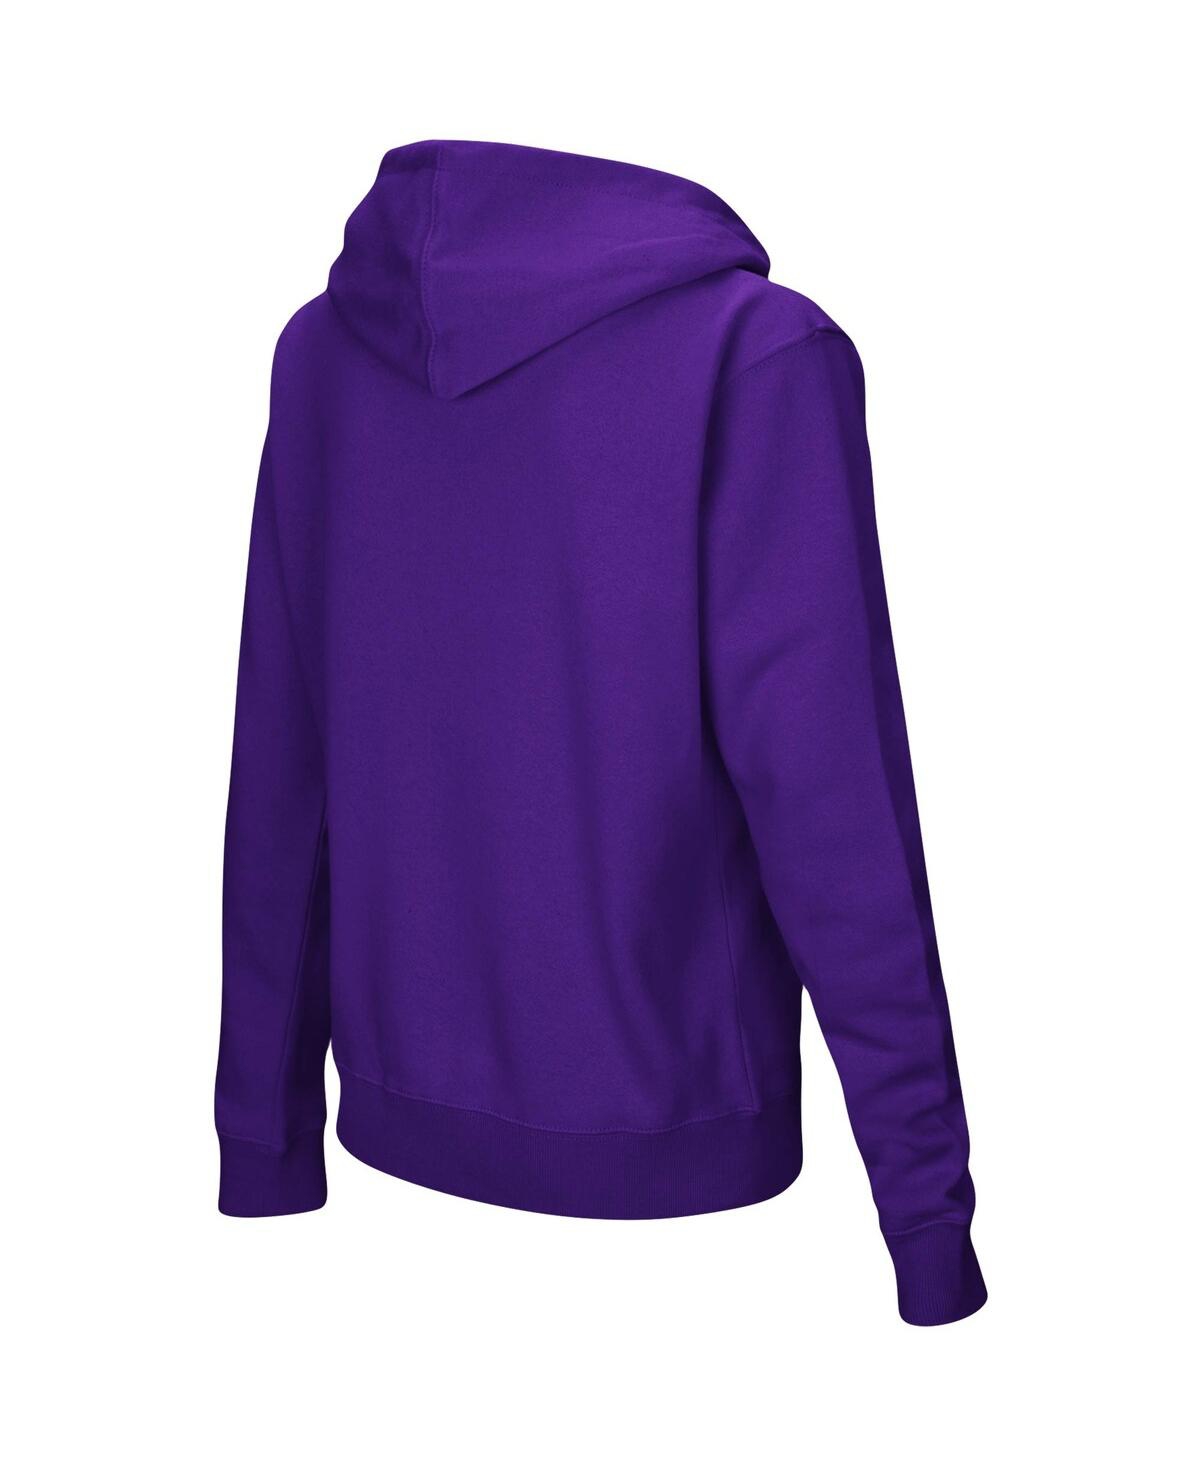 Shop Stadium Athletic Women's Purple Clemson Tigers Big Logo Pullover Sweatshirt